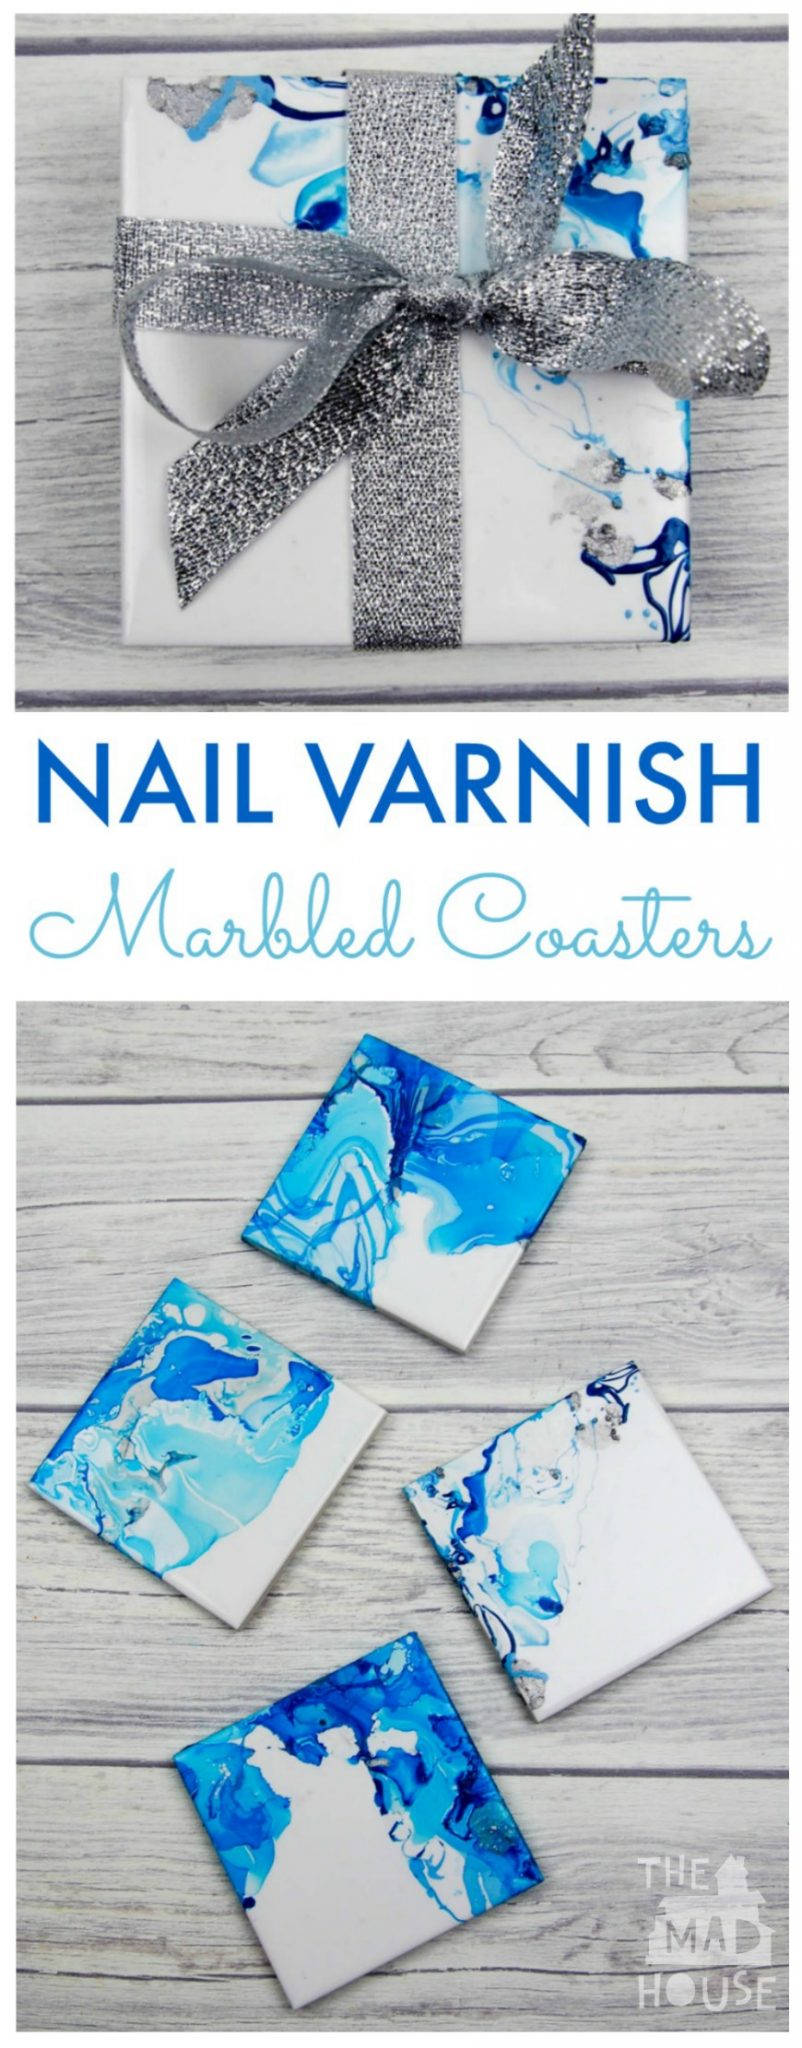 How to make Nail Varnish Marbled Coasters. These beautiful marbled coasters are beautiful as so simple to make. A great homemade gift and DIY craft